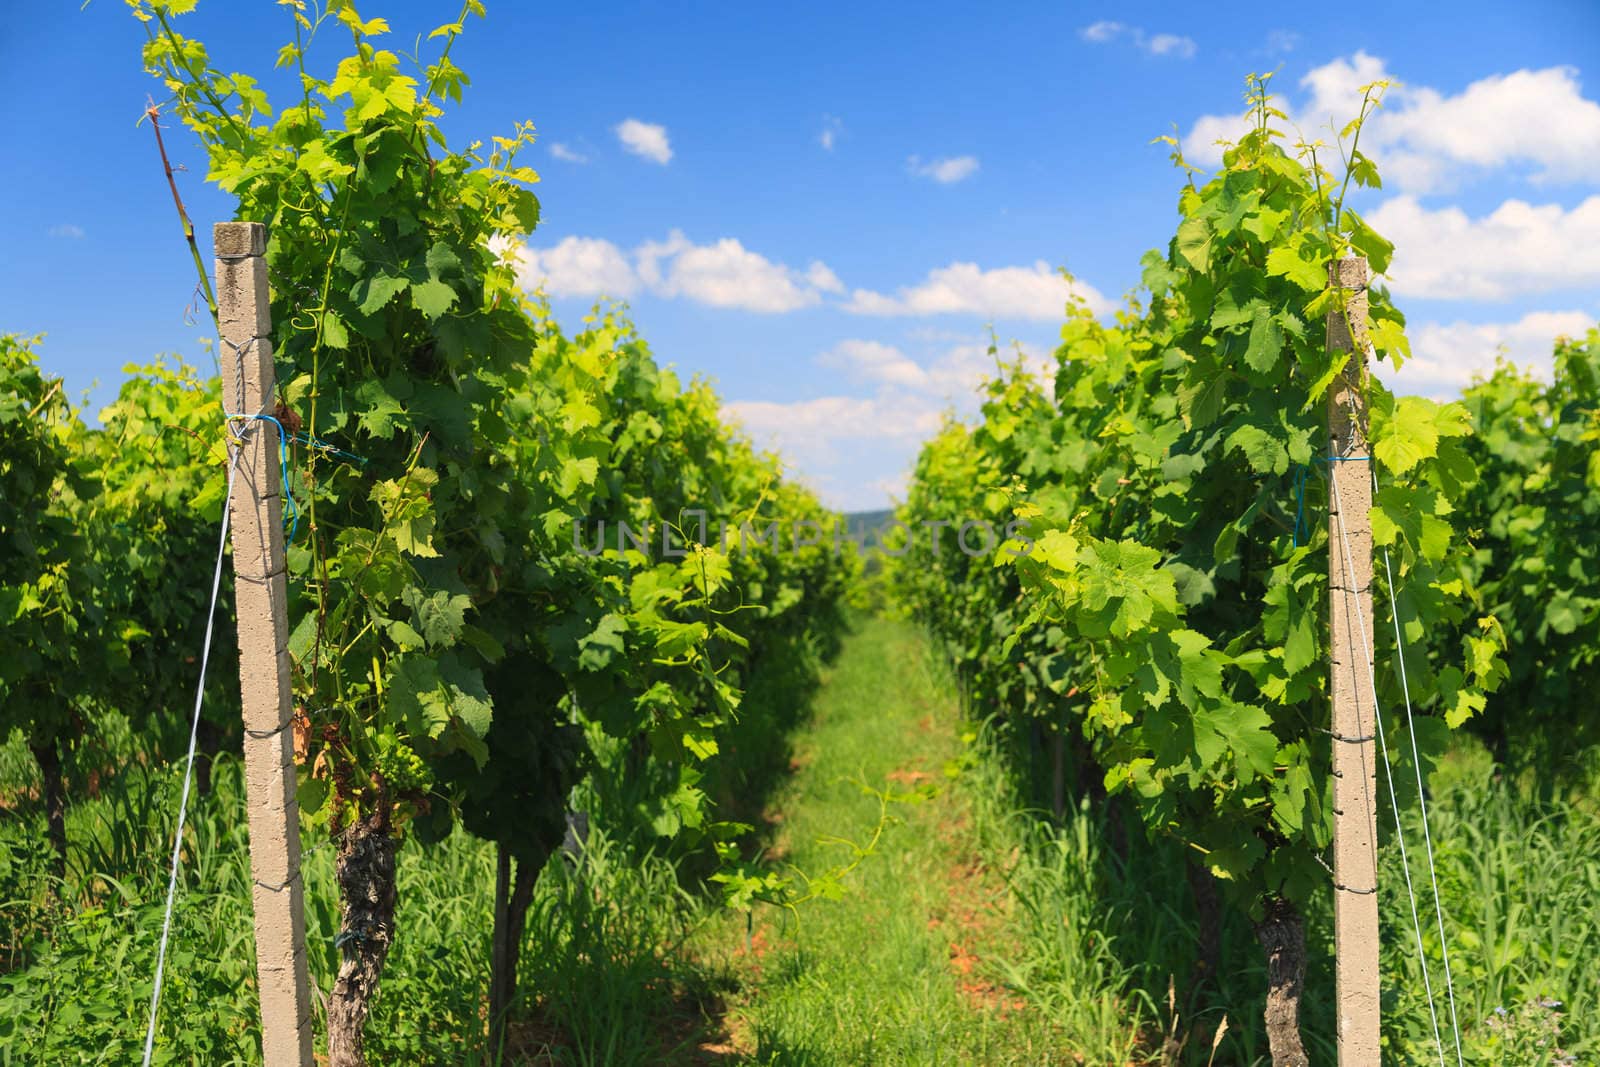 Vineyard rows by anobis